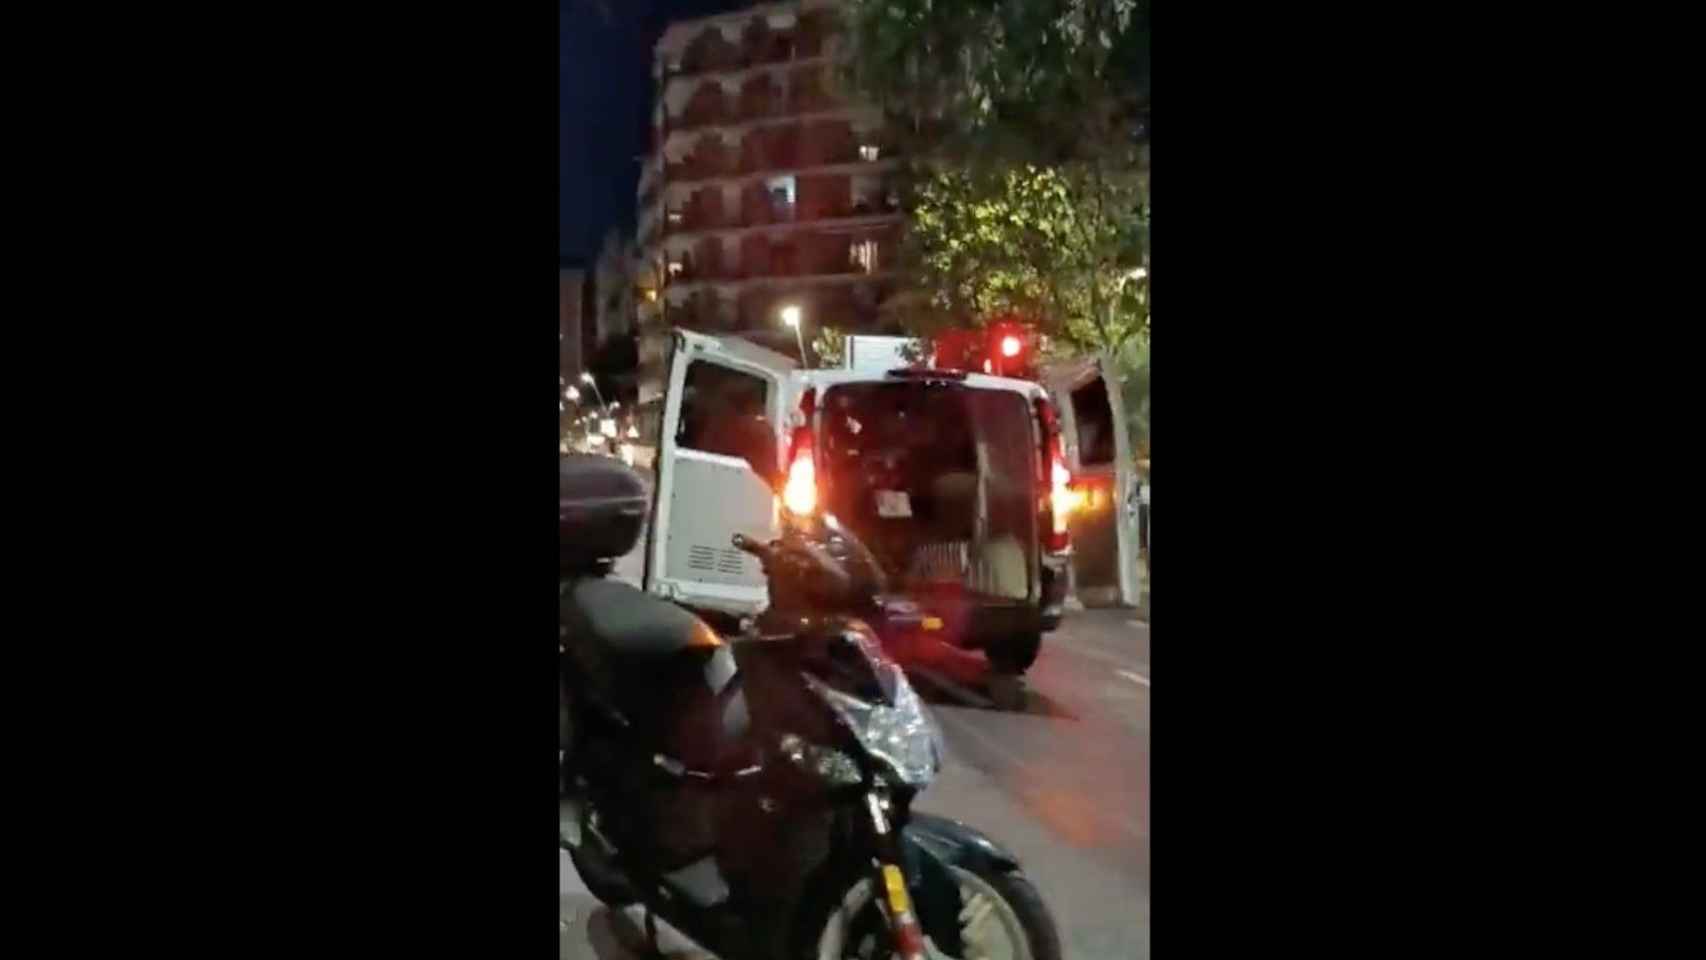 Un momento del presunto robo de la moto en pleno centro de Barcelona / TWITTER @marcal017